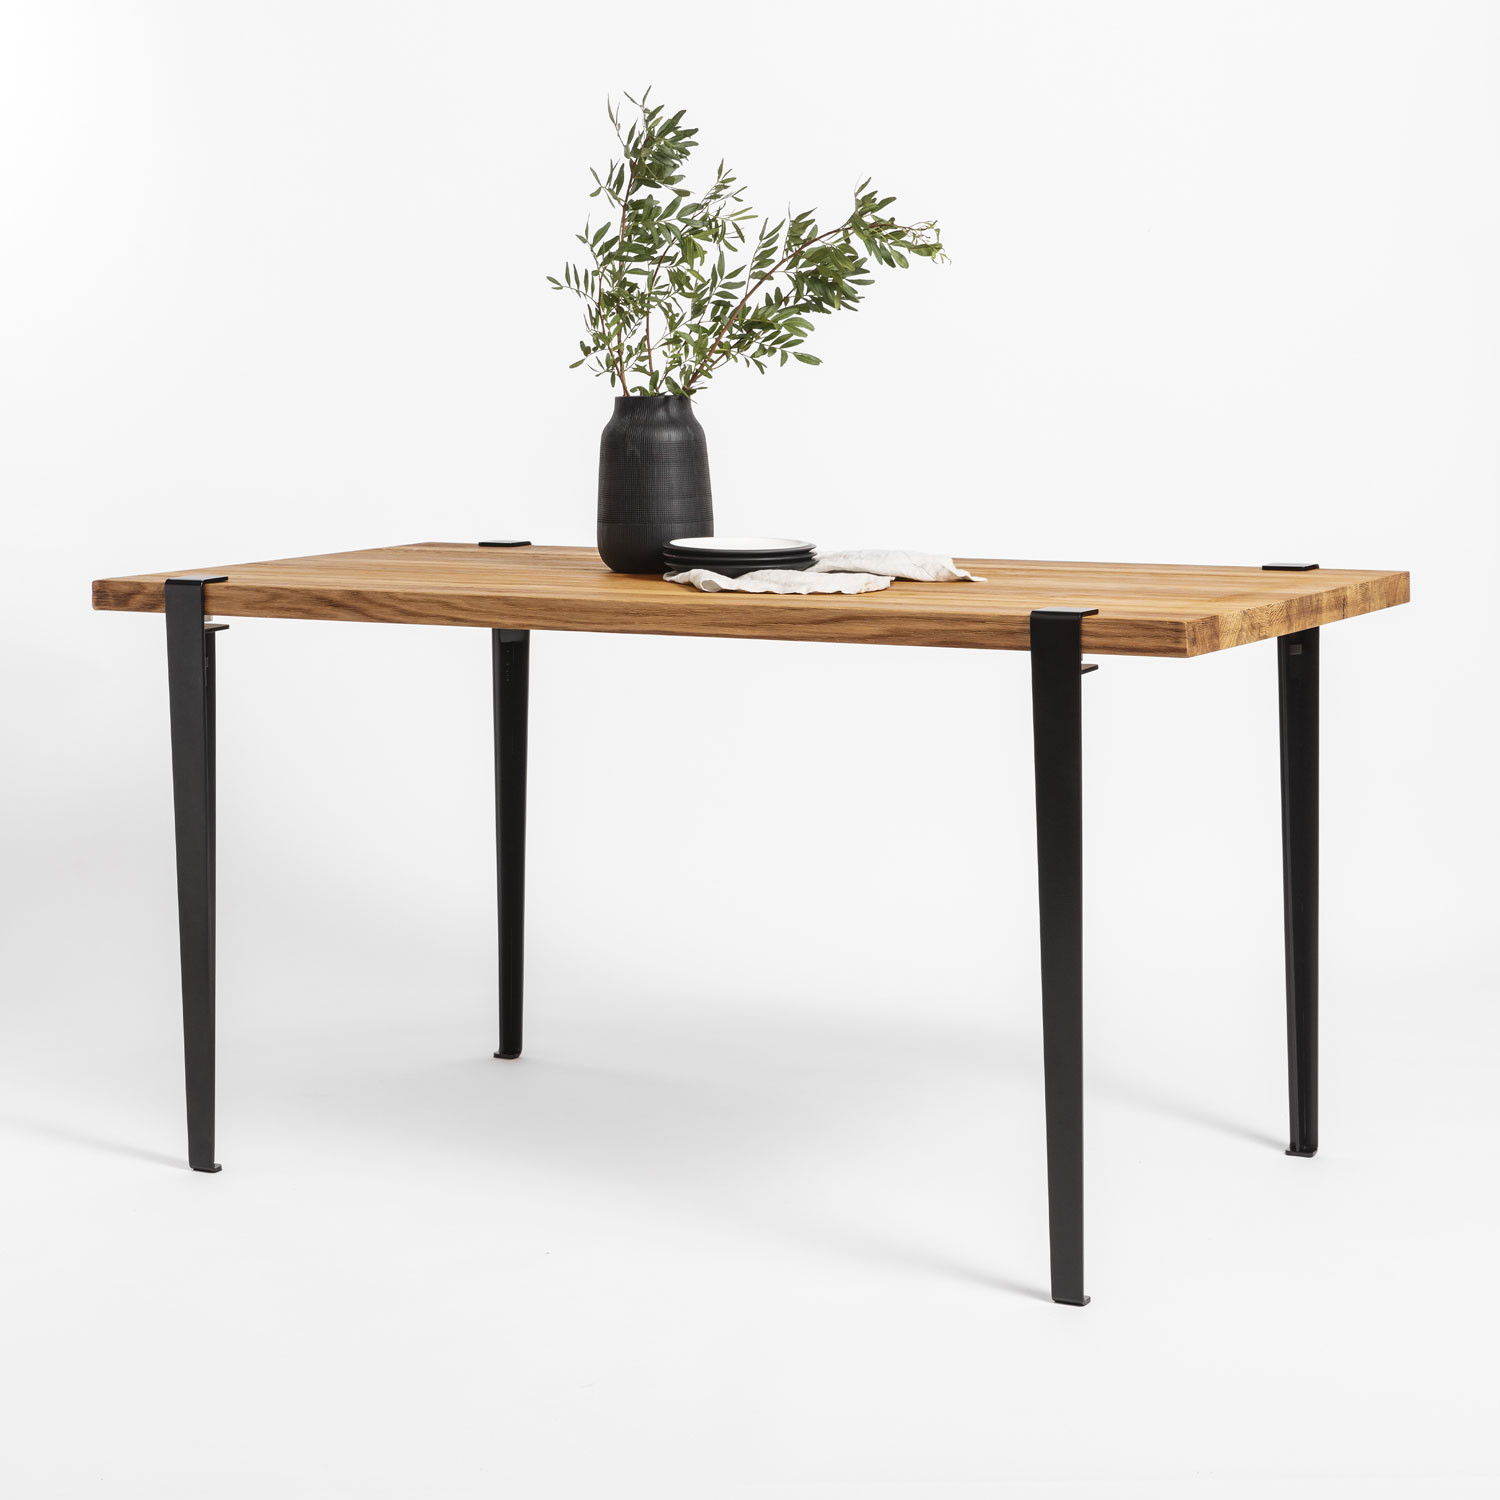 Reclaimed wood dining table with TIPTOE steel legs